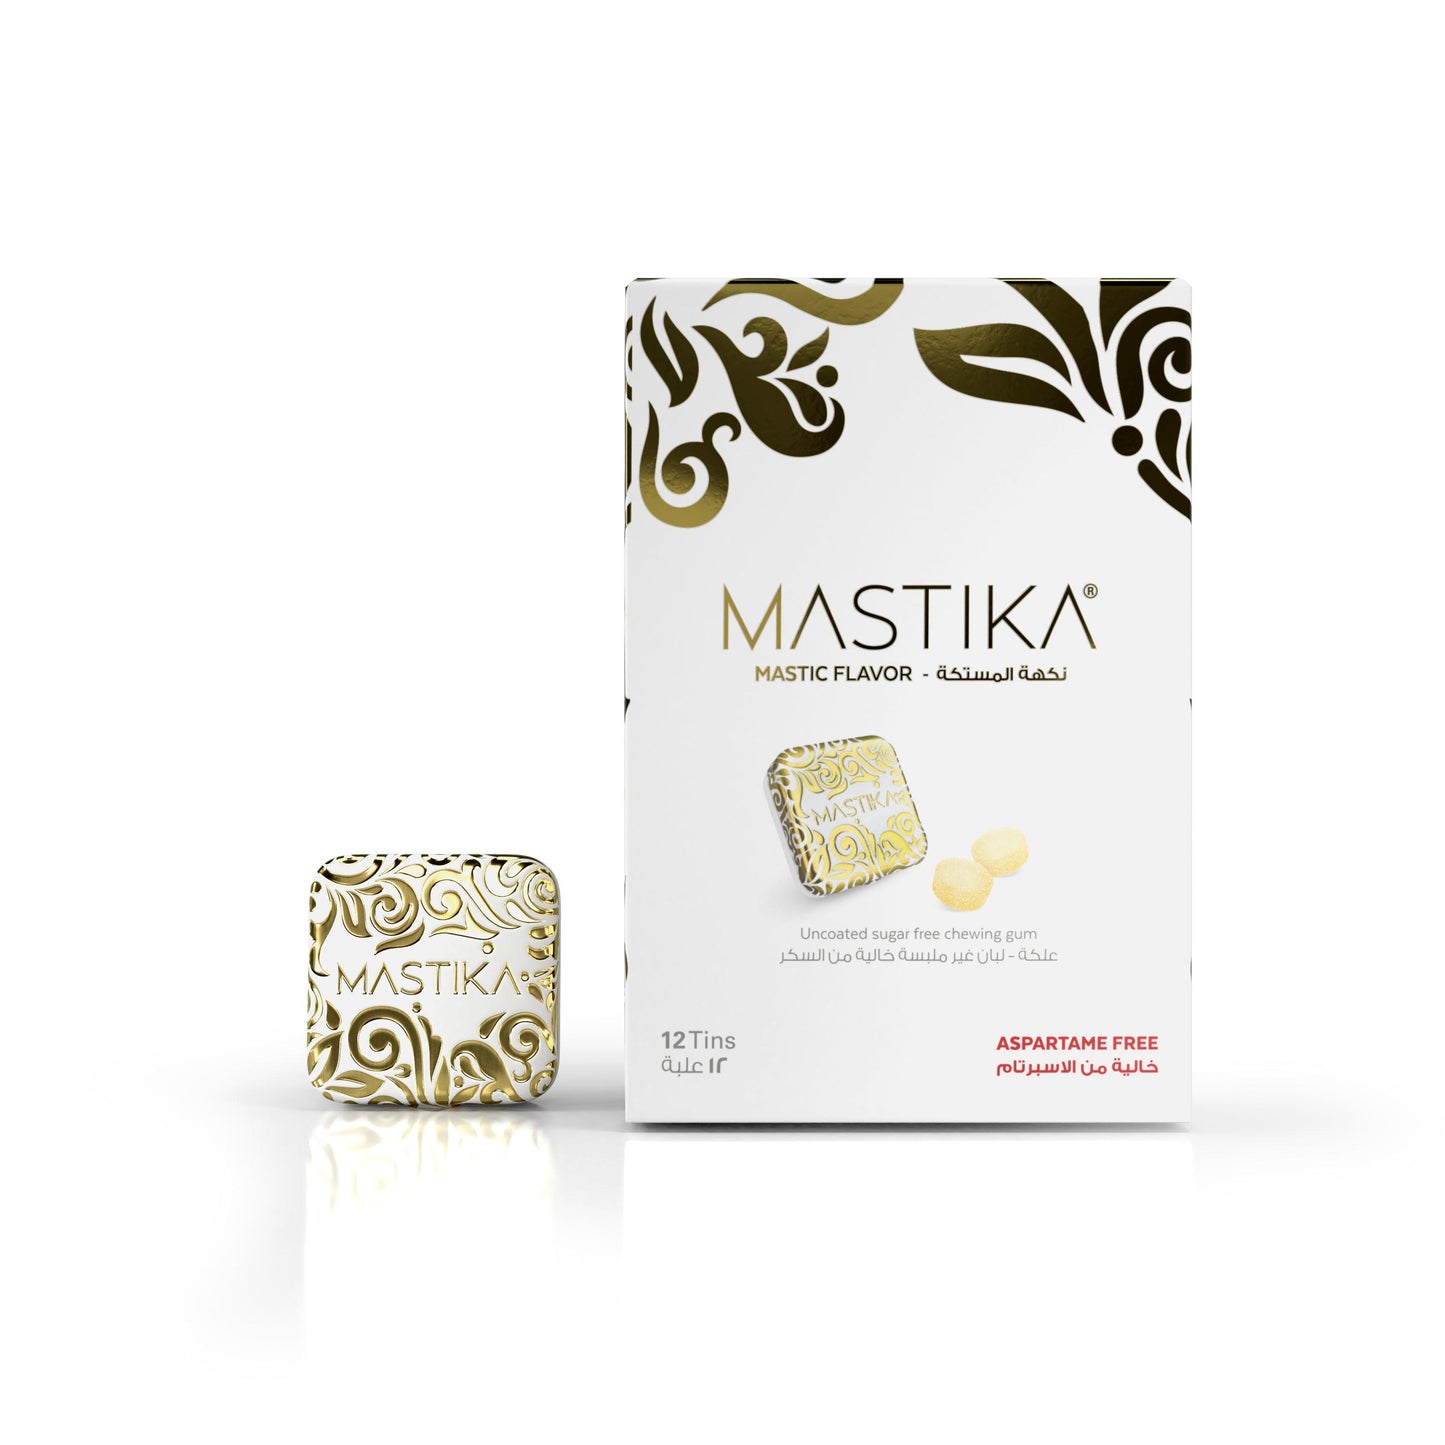 MASTIKA GUM - NATURAL PREMIUM MASTIC FLAVORED CHEWING GUM - LUXURIOUS AND GLAMOROUS 